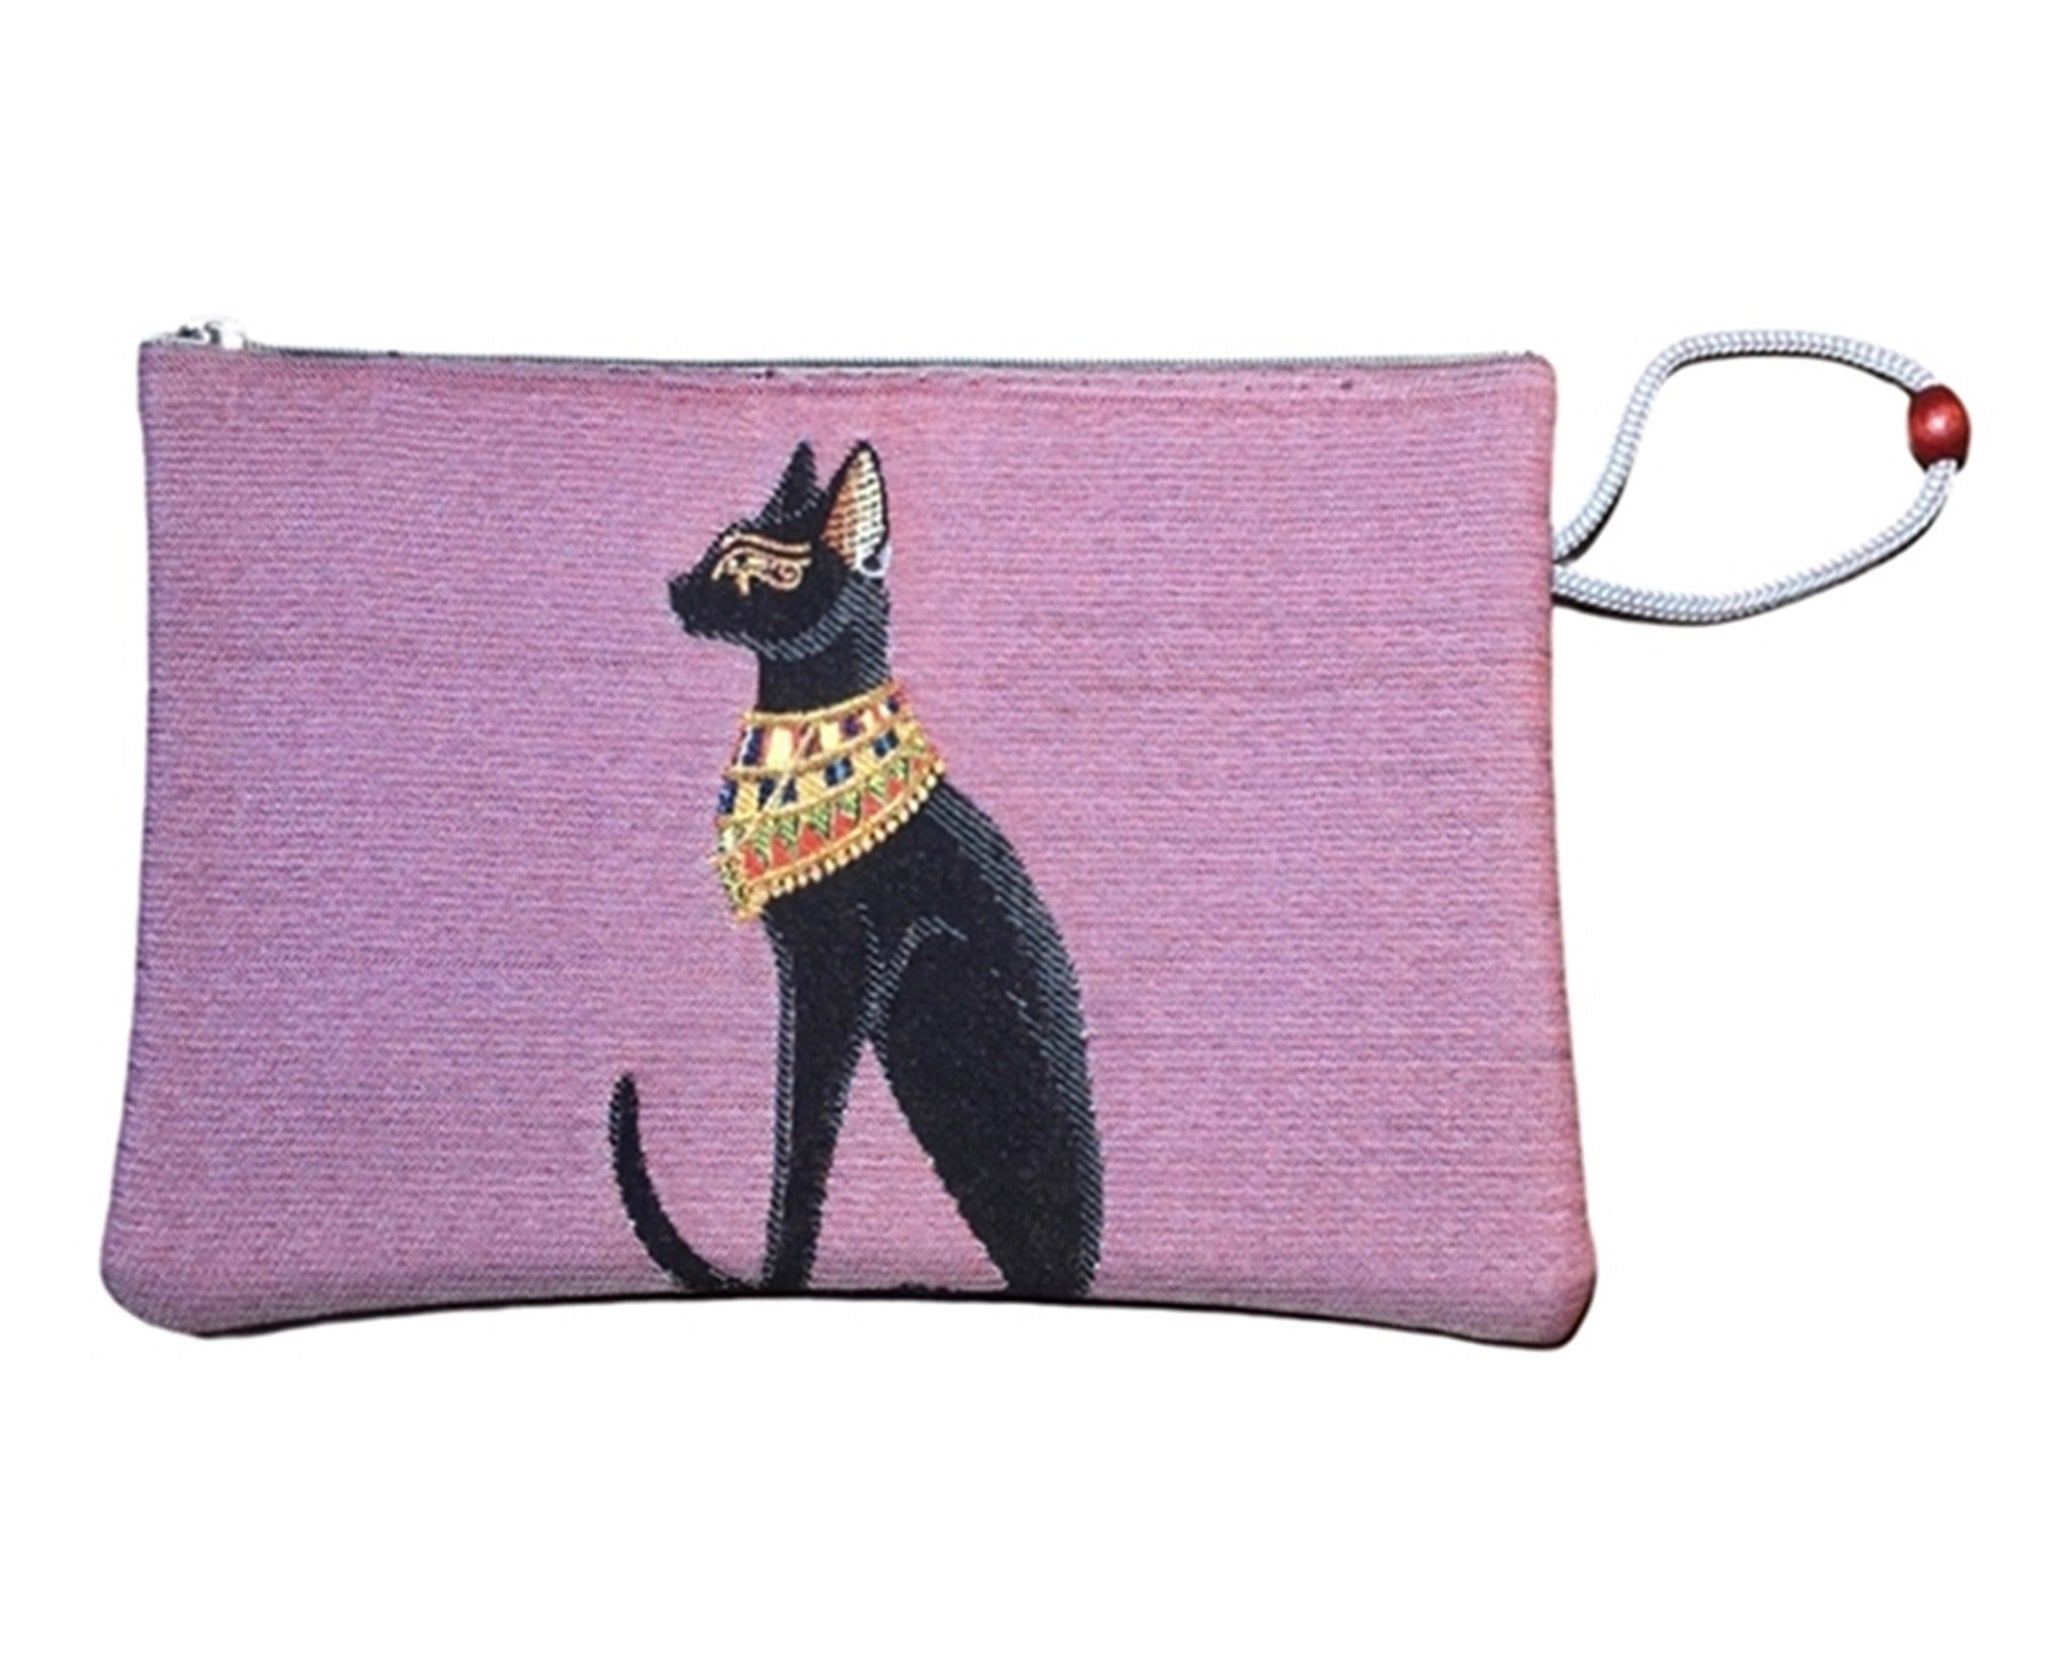 Pharaoh Cat Vintage Style Ethnic Turkish Boho Purse Bag | Clutch | Cosmetic bag | Hippie Bag | Bohemian Bag | Hand Bag | Clutch Purse |Kilim